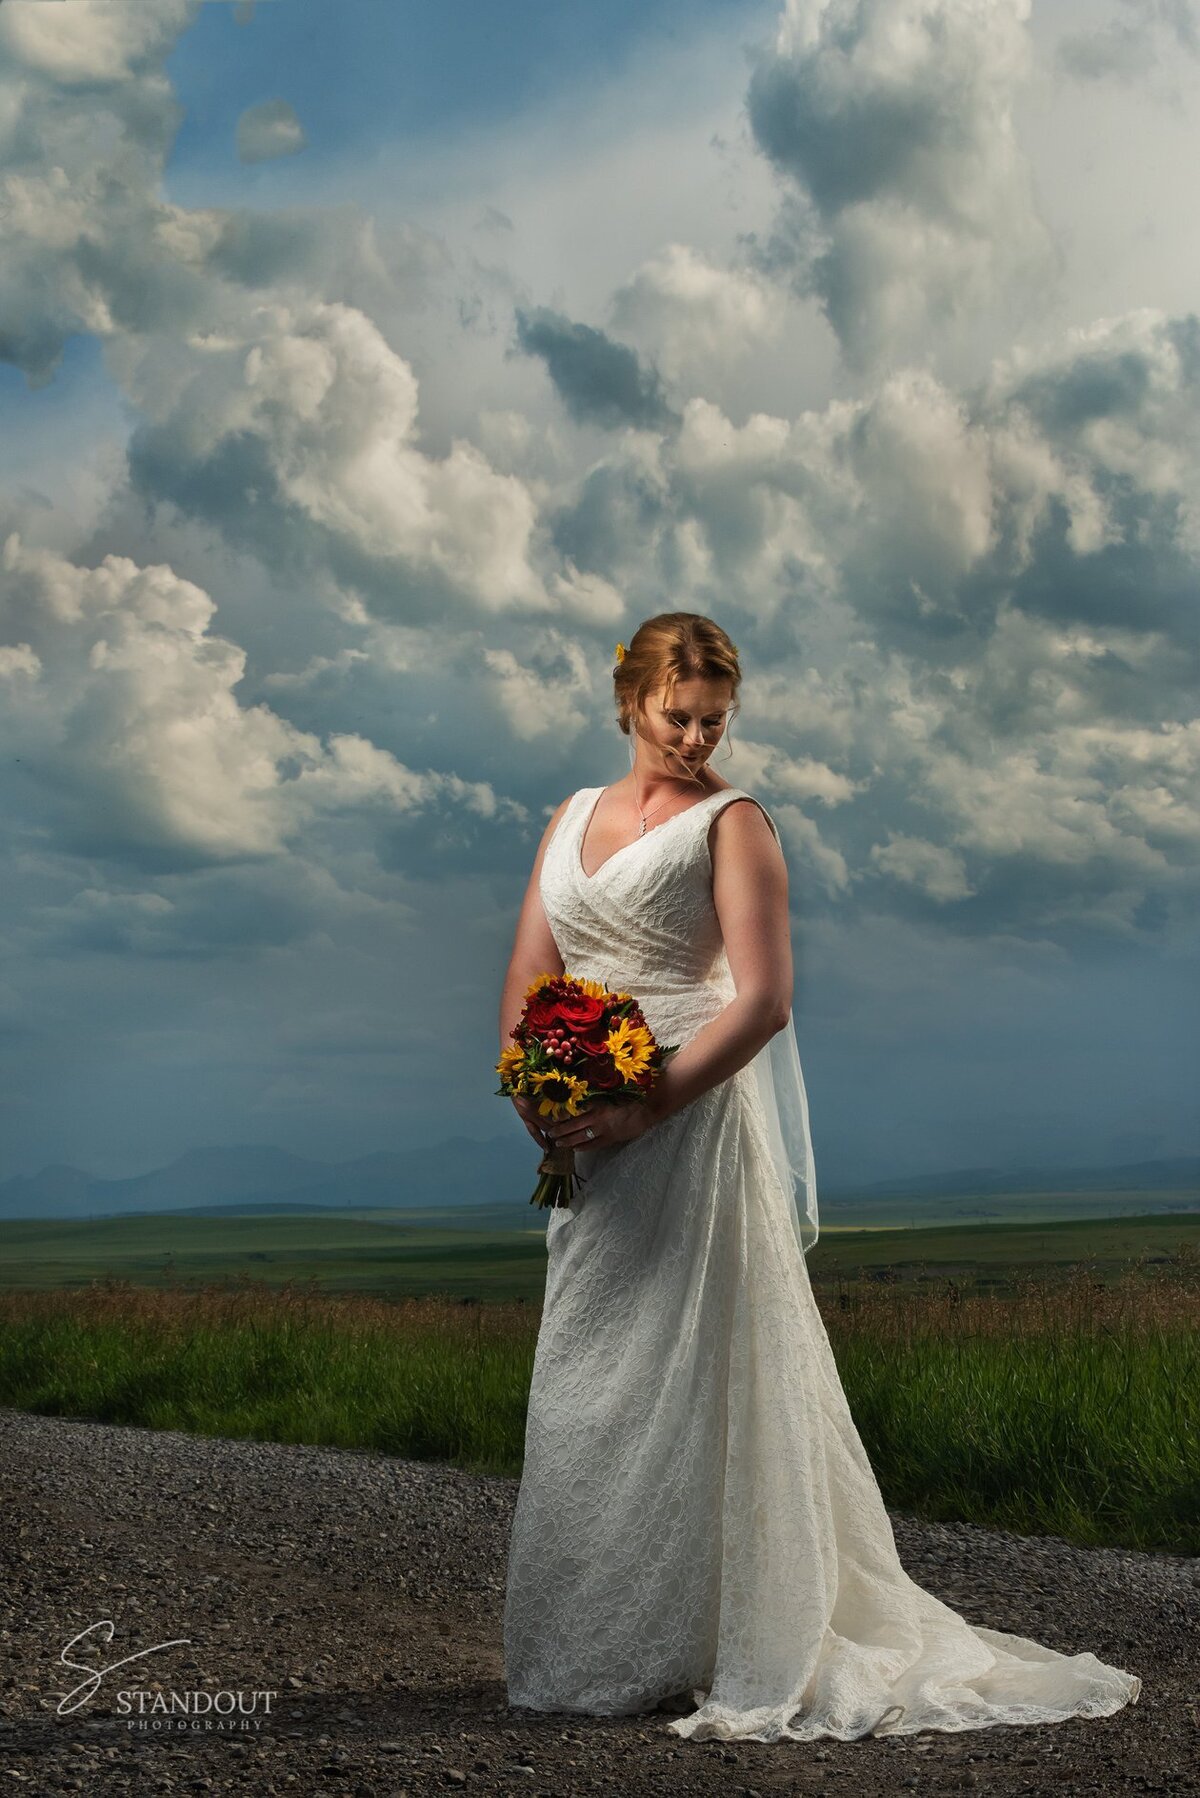 Lethbridge Wedding Photographer & Alberta Professional Photography Studio